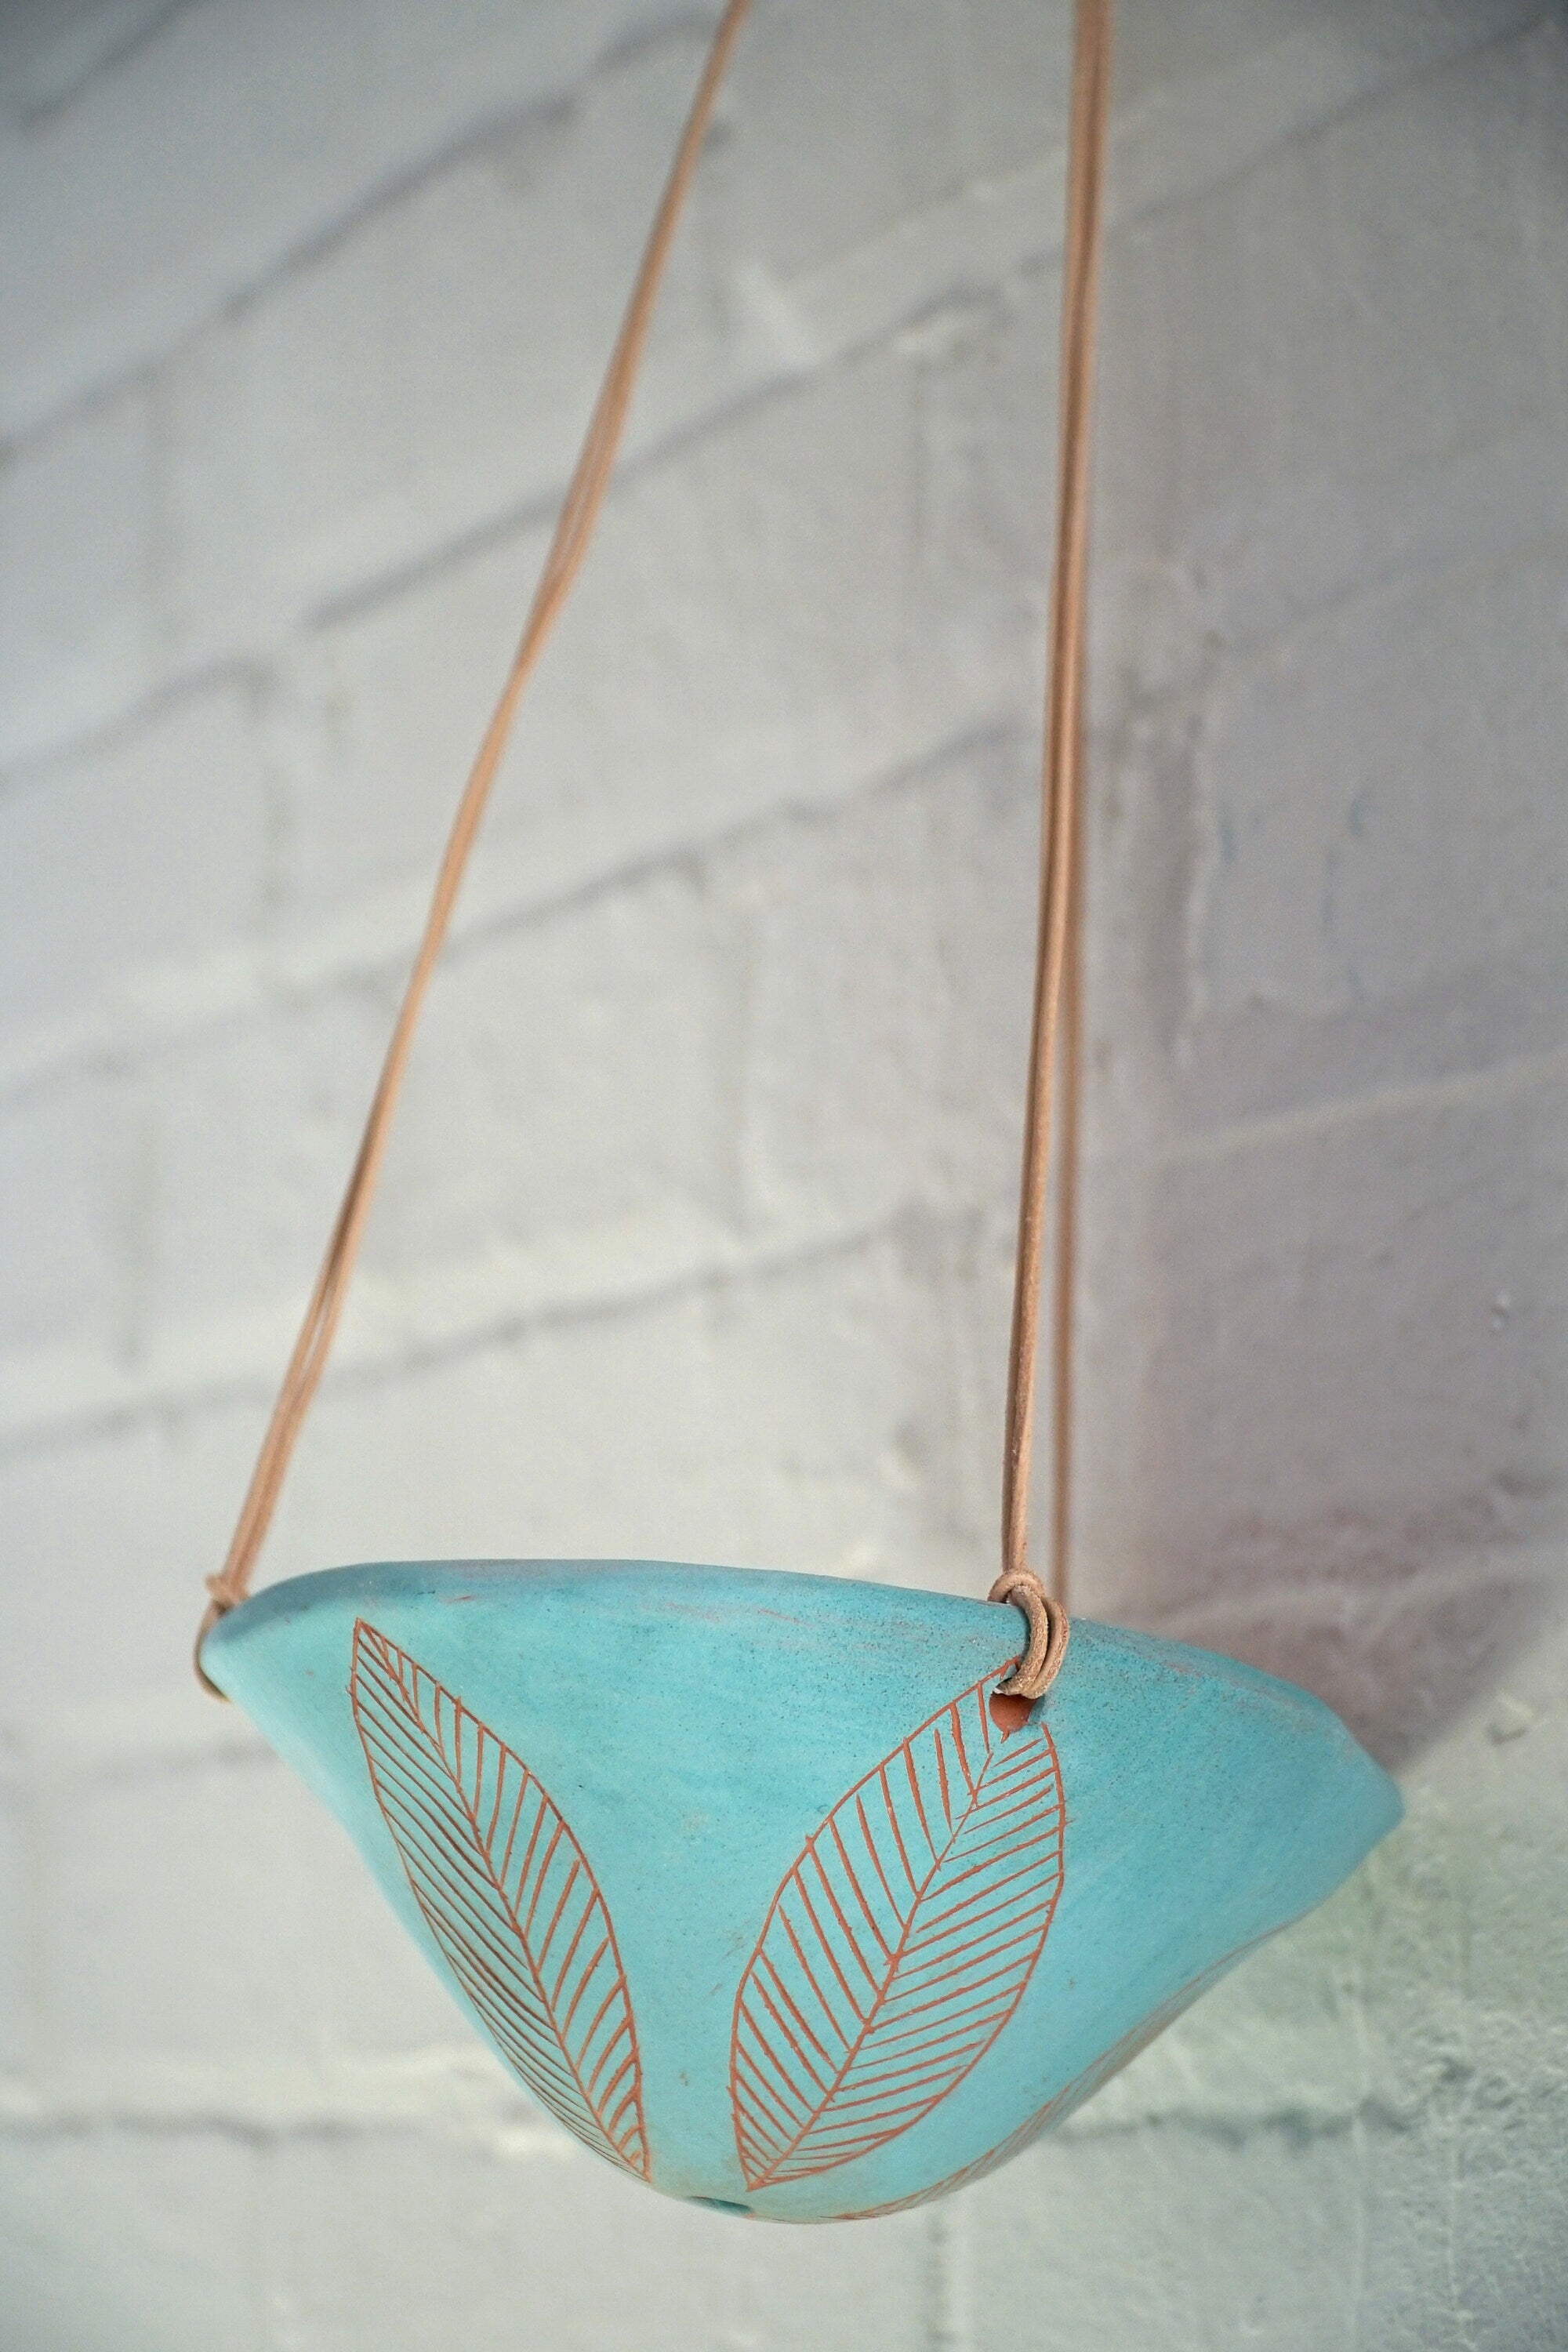 Aqua & Terracotta Mini Hanging Planter w/ "Leaf" Design -Hanging Pot with Carvings - Succulent, Cactus, Herb, Air Plant